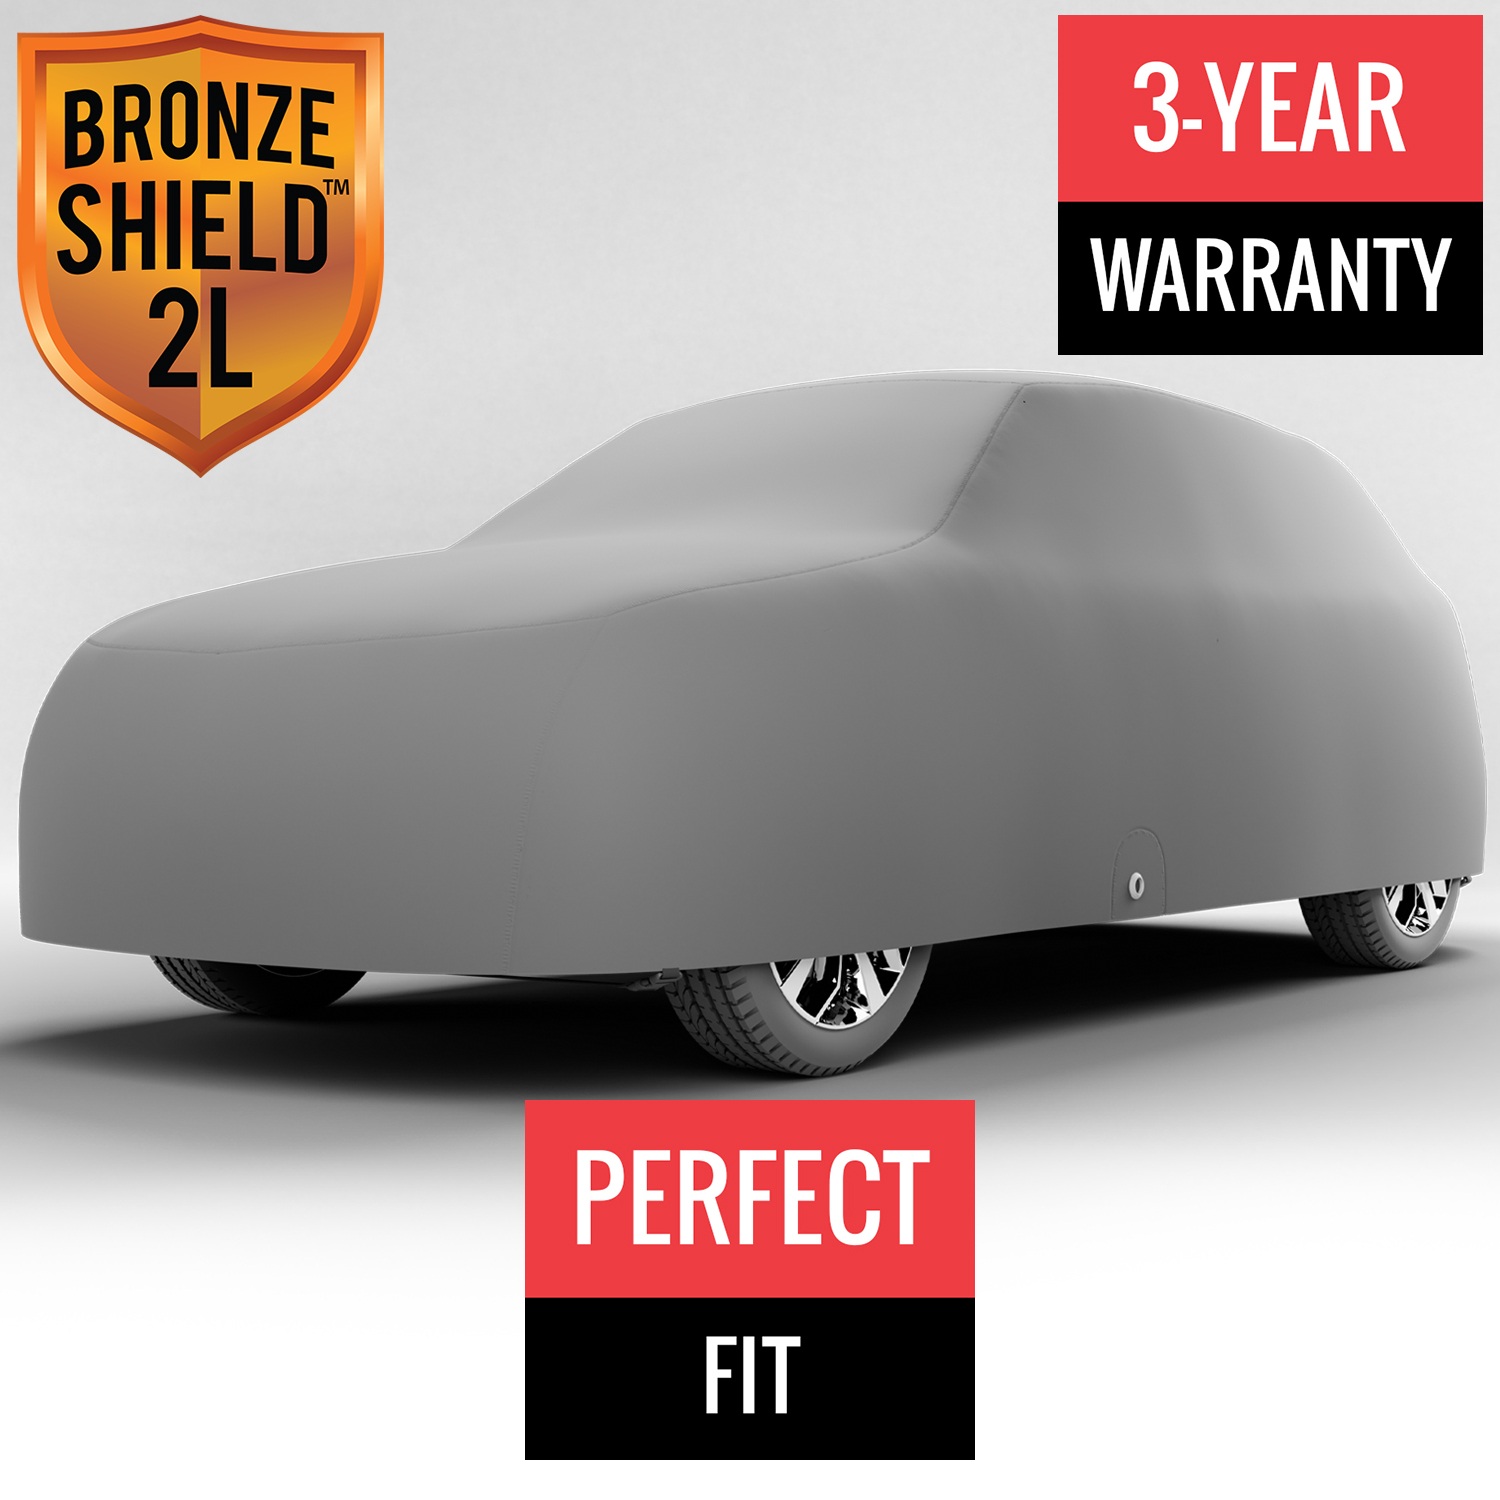 Bronze Shield 2L - Car Cover for Scion xB 2014 Wagon 4-Door